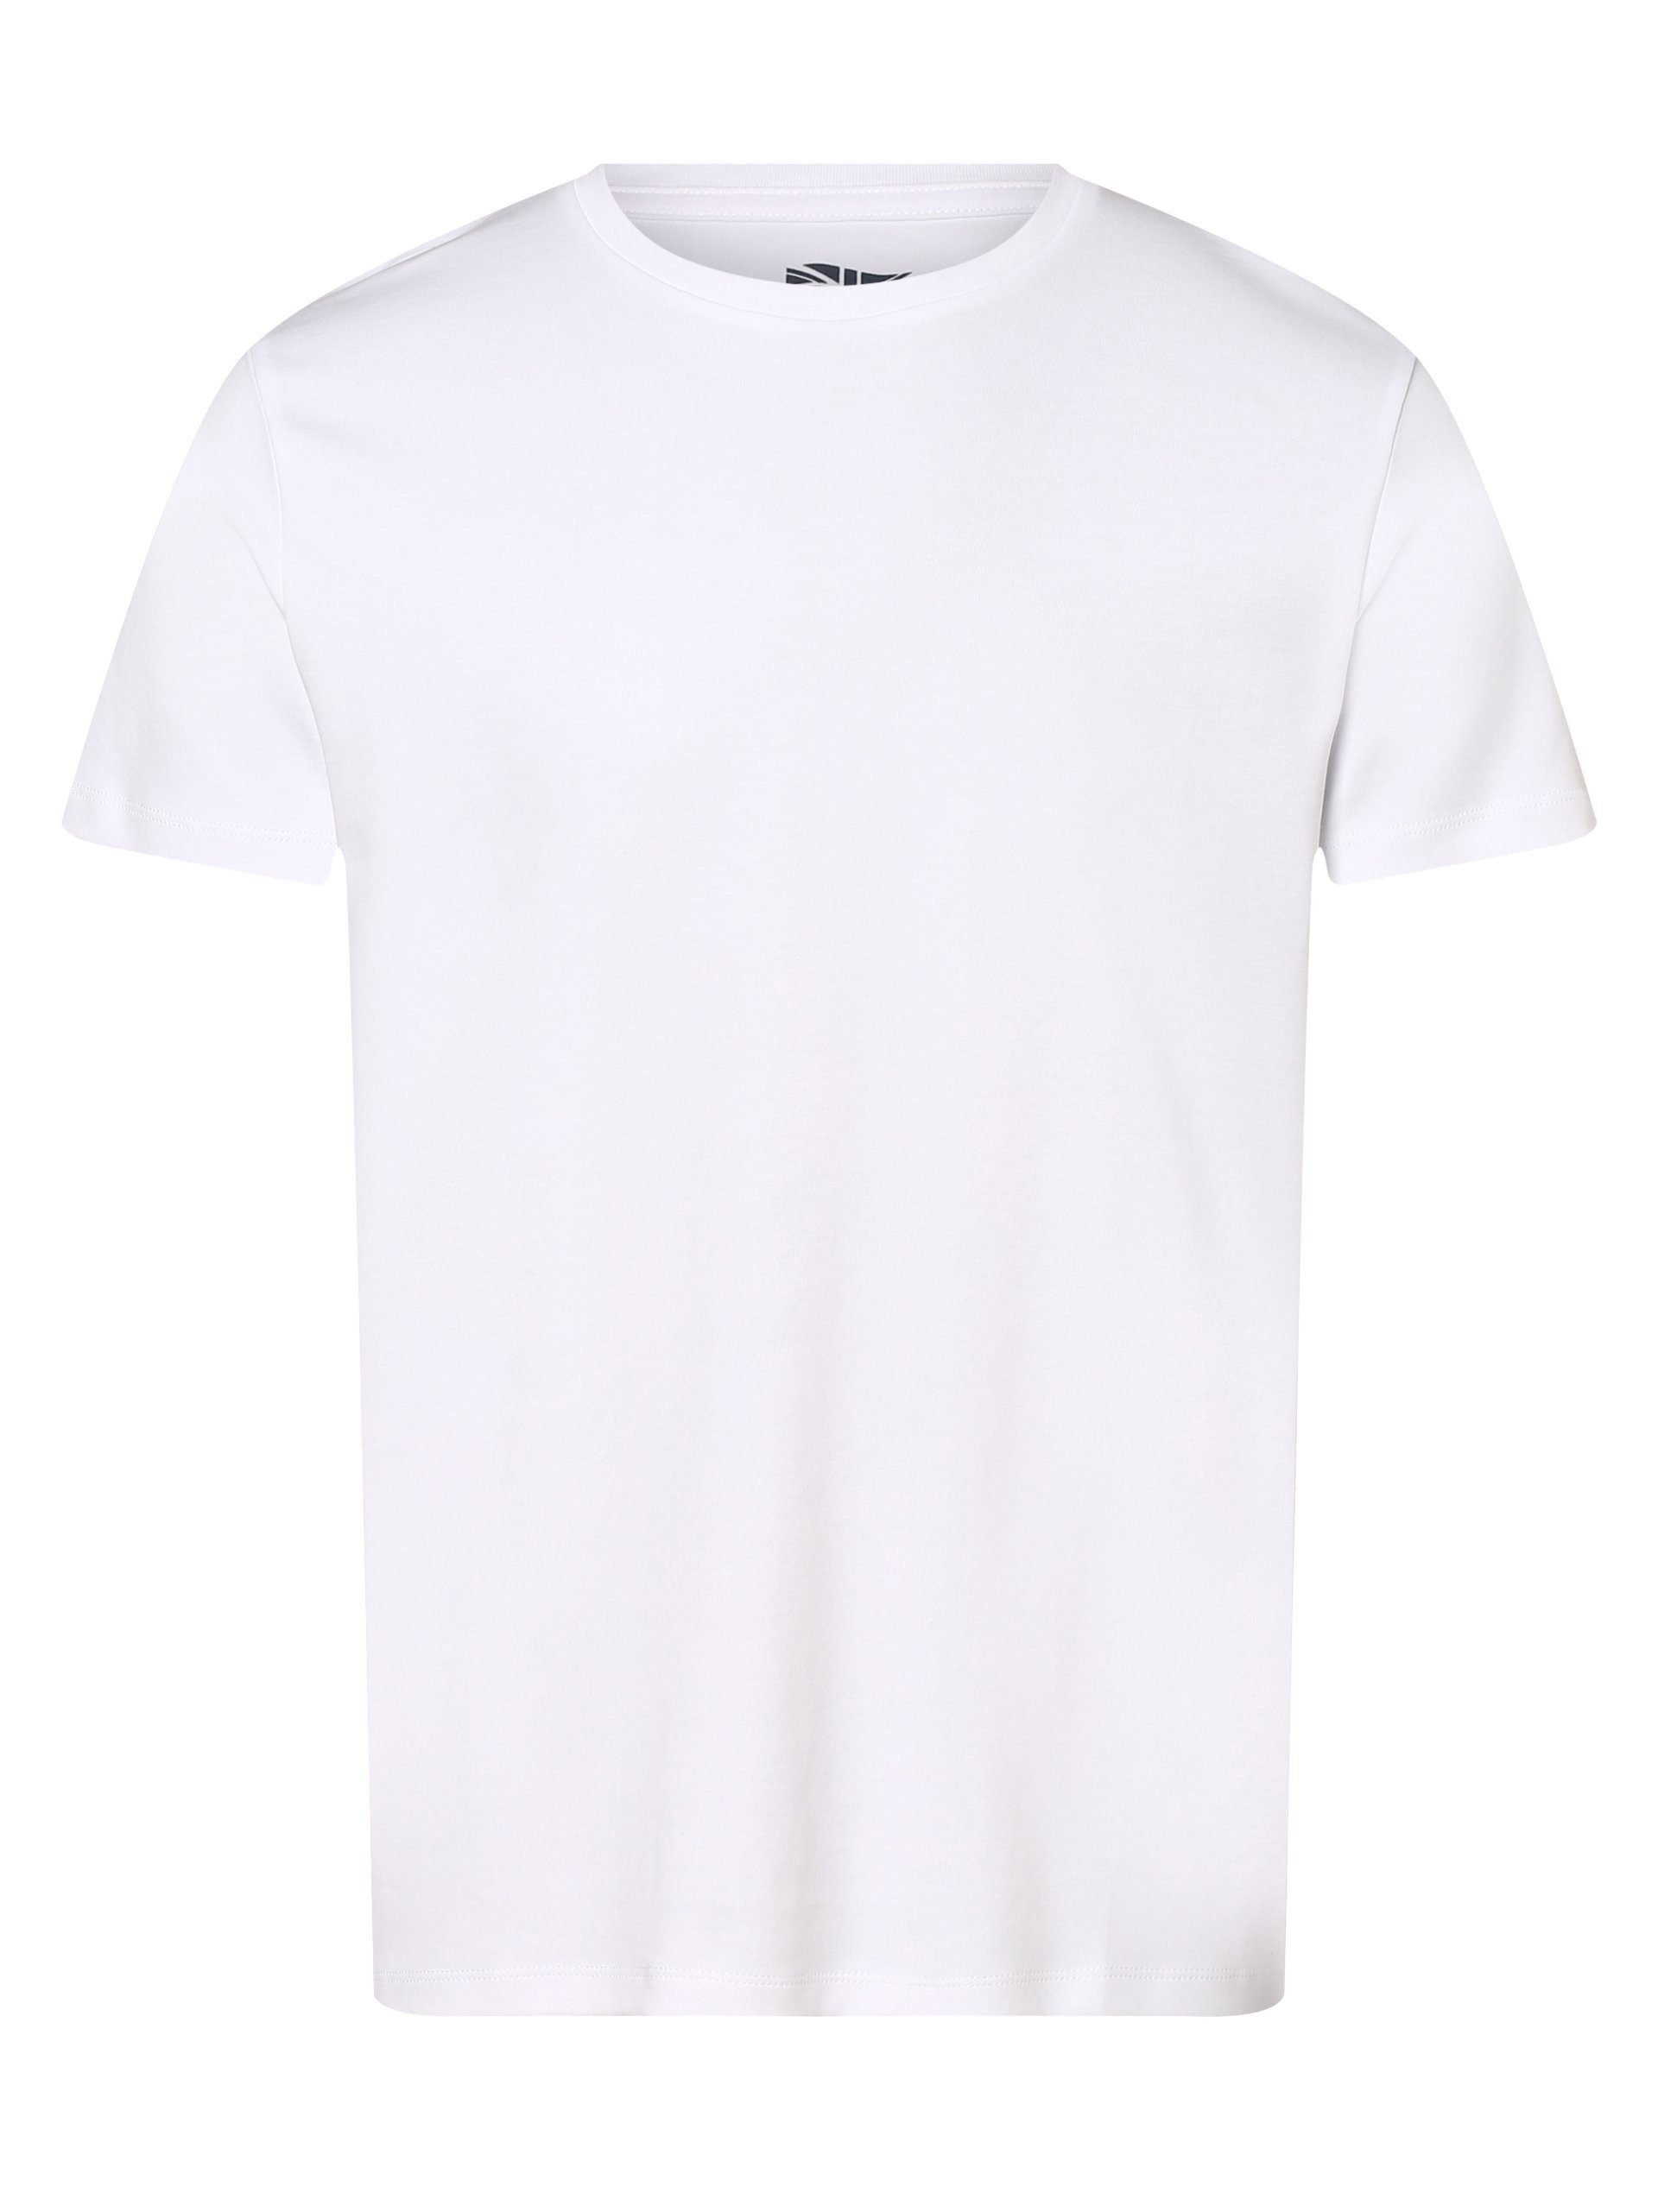 Finshley & Harding London T-Shirt